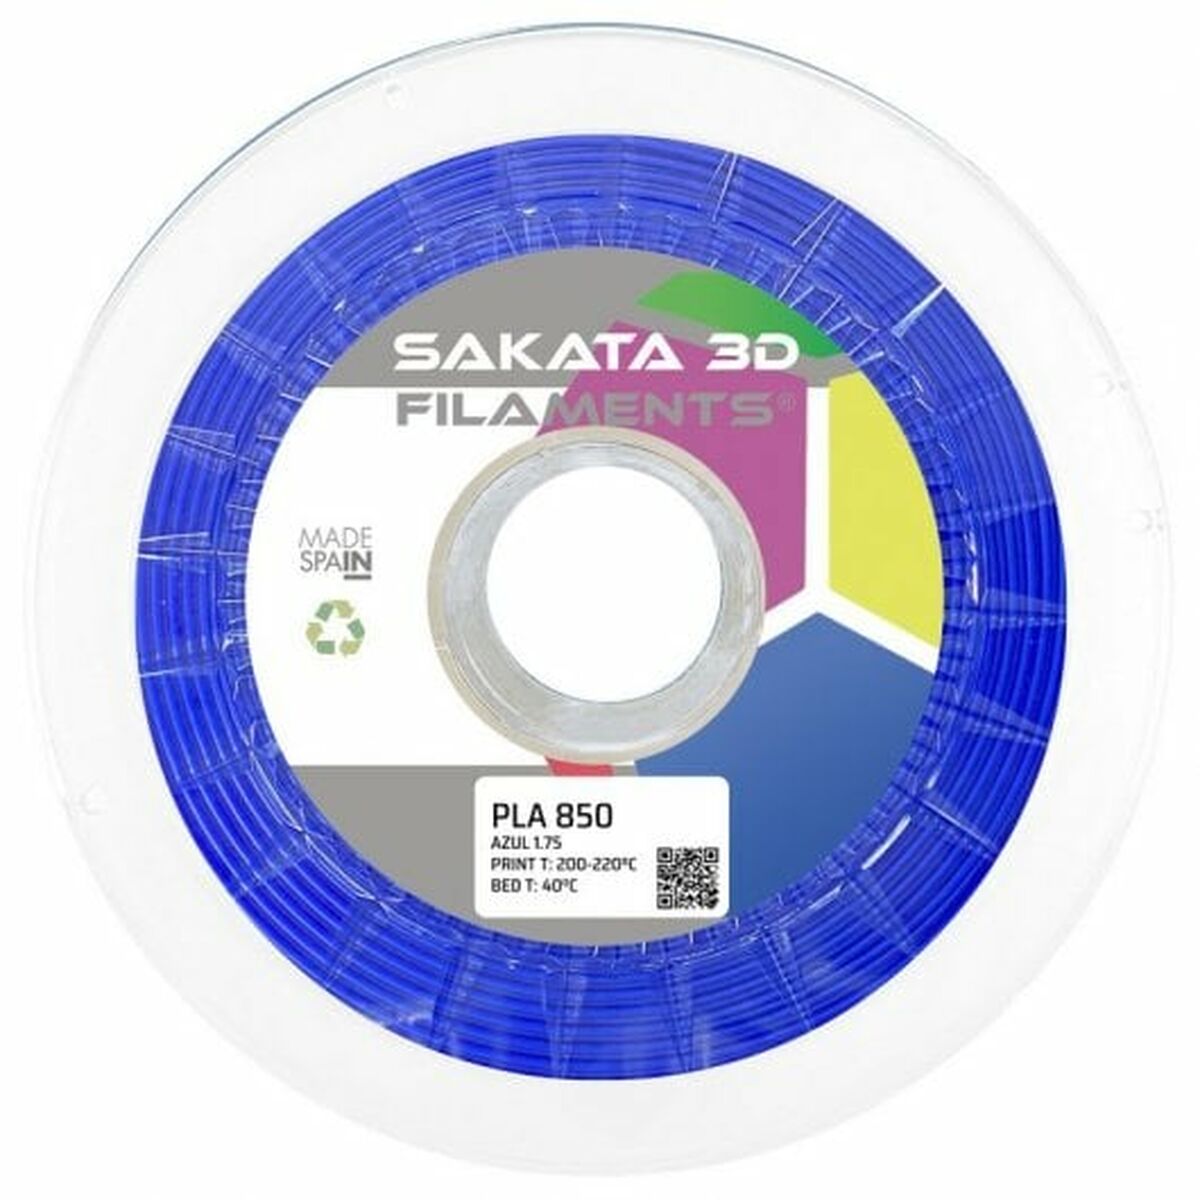 Bobina di Filamento Sakata 3D PLA 850